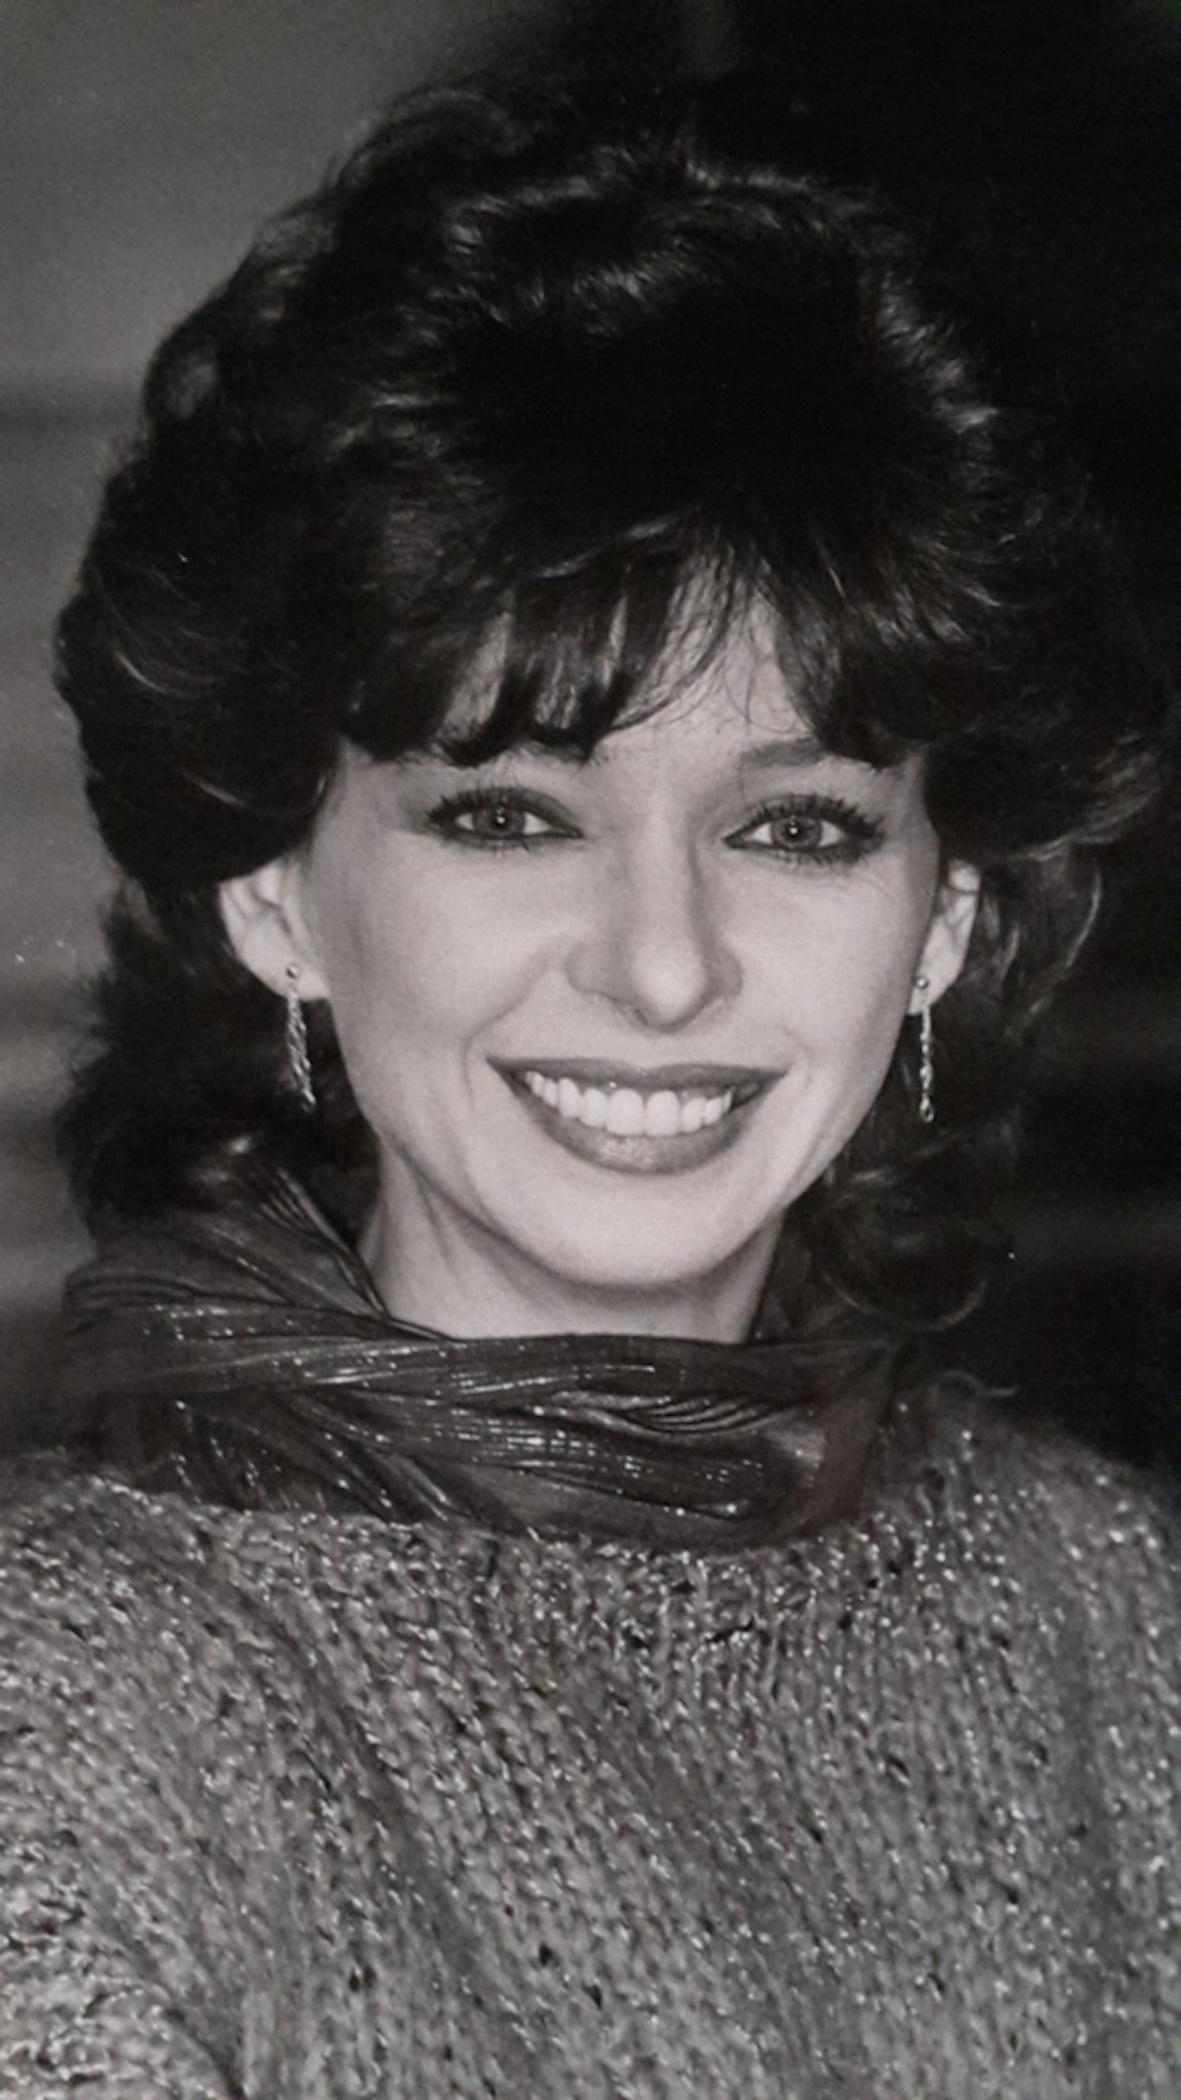 Unknown The Italian Actress Enrica Bonaccorti Photo 1980s For Sale At 1stdibs 